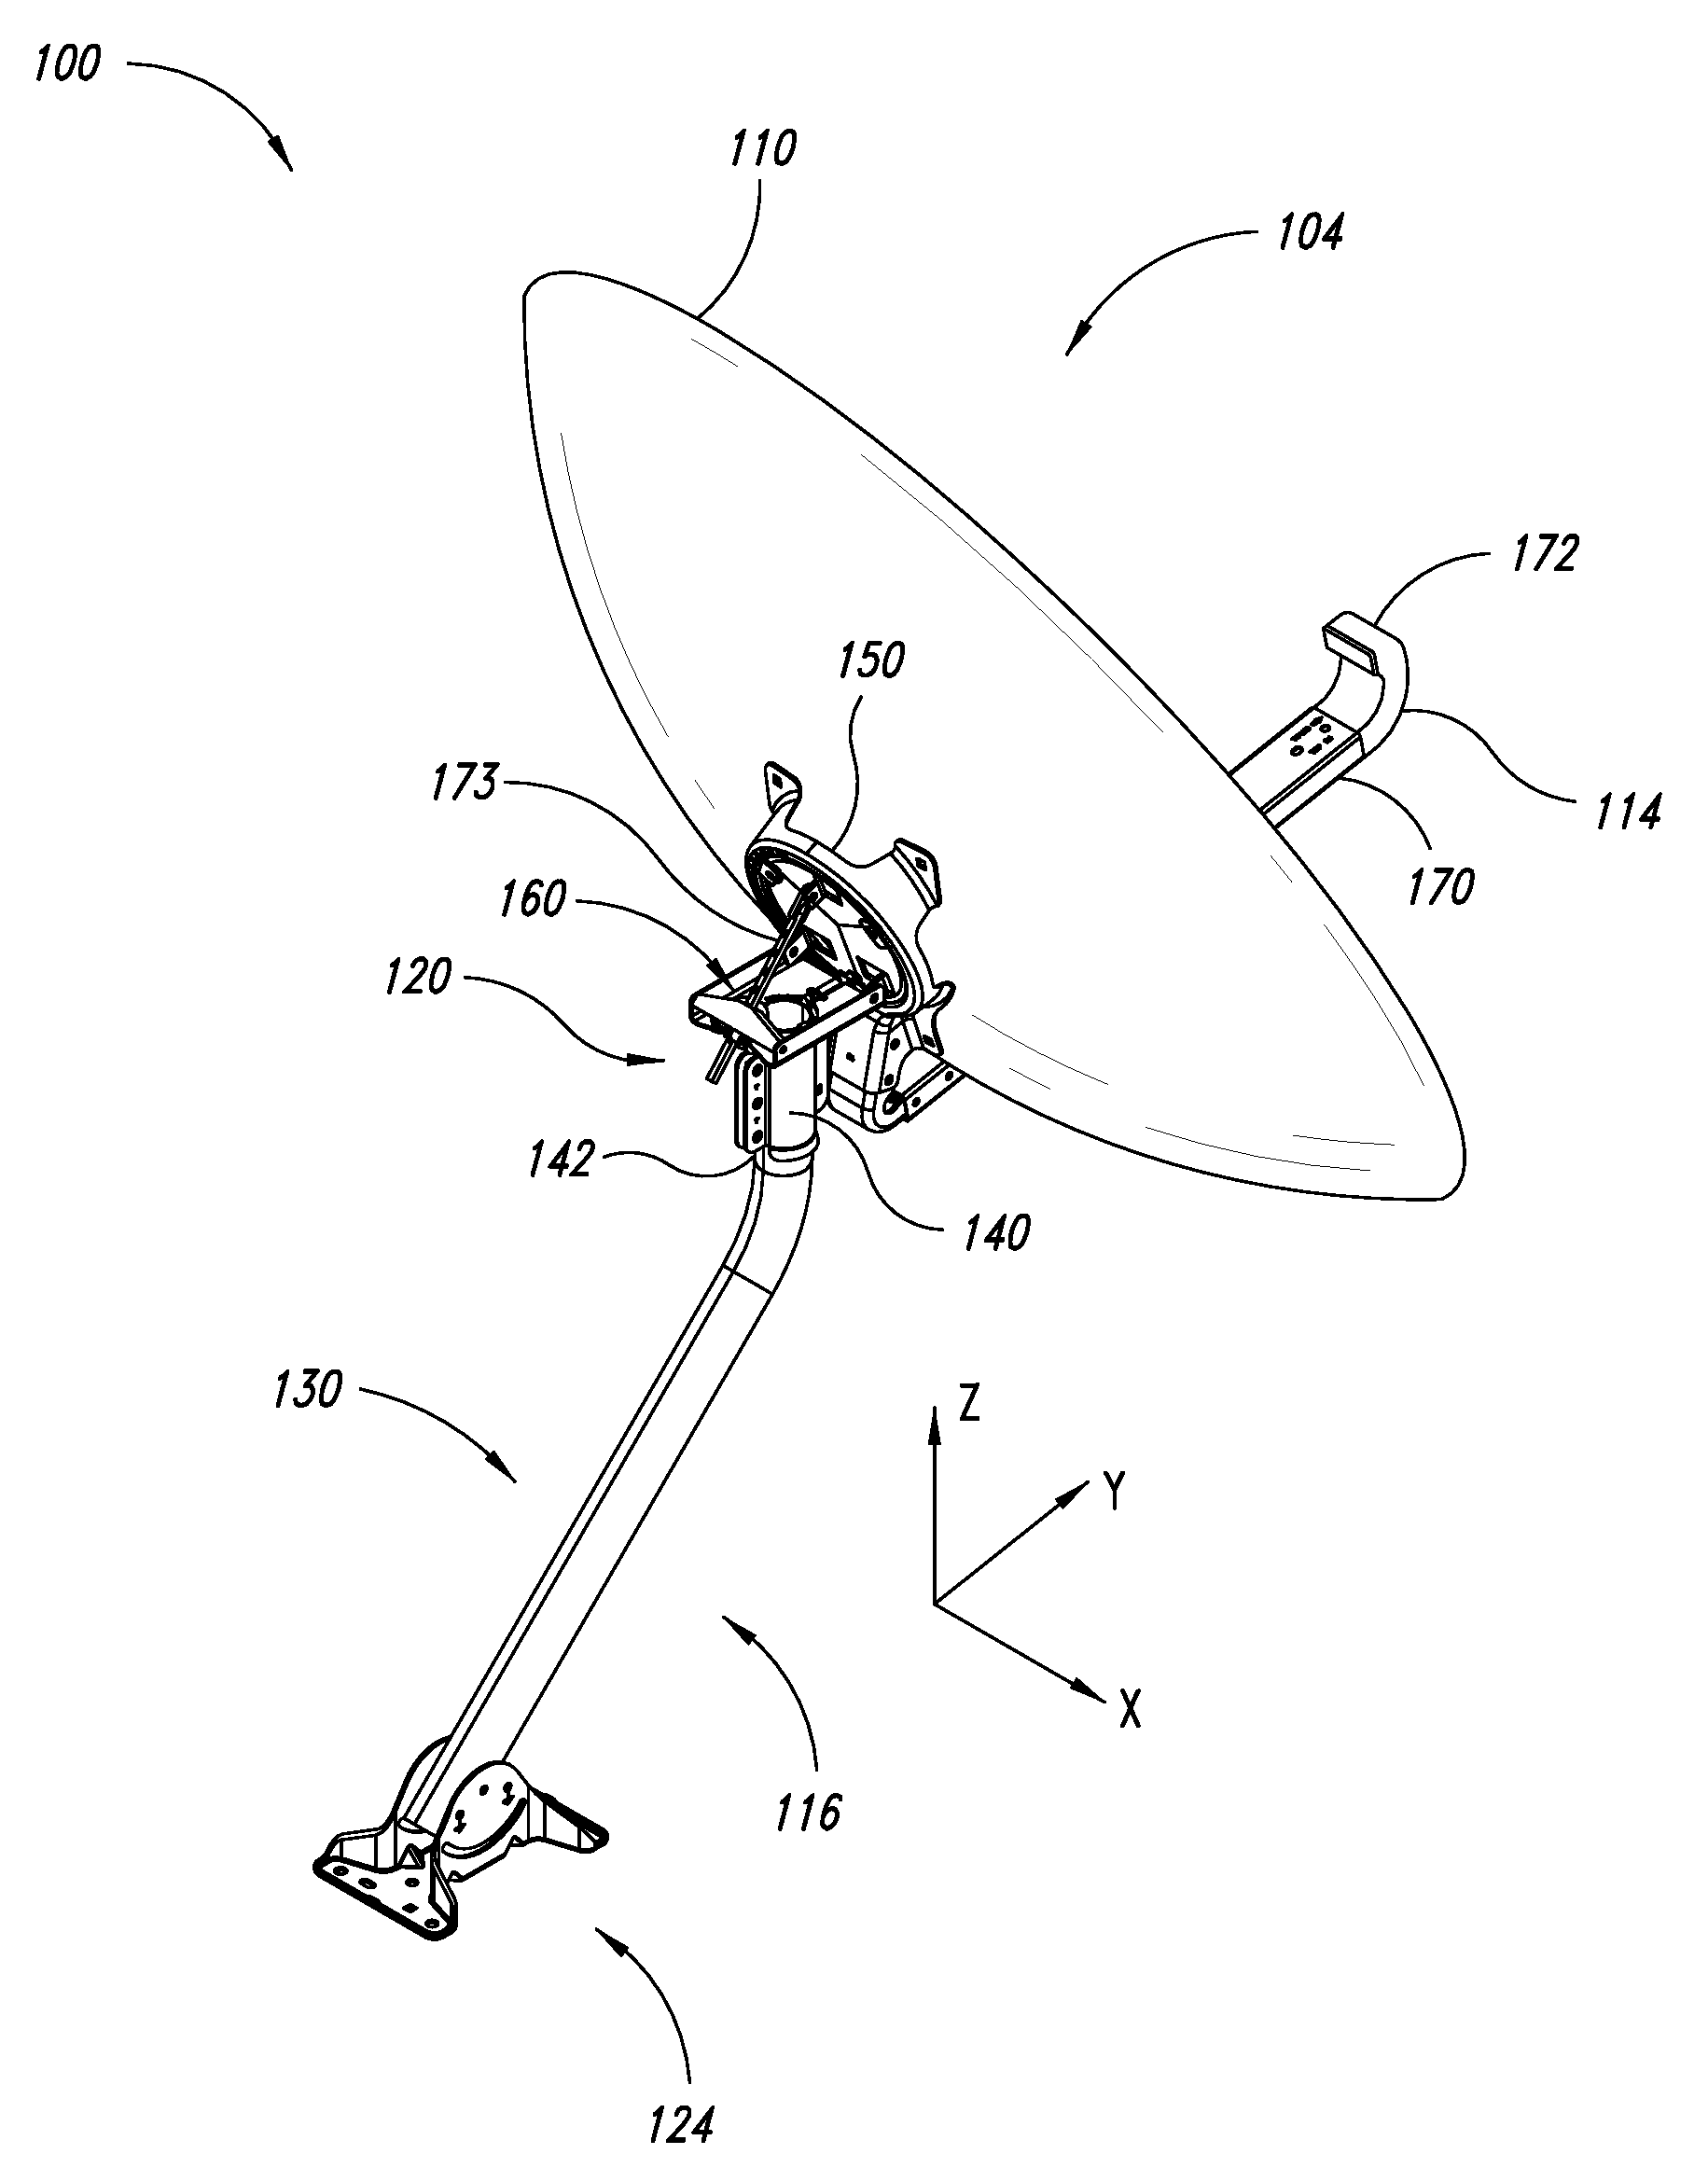 Adjustment mechanism for dish antenna system